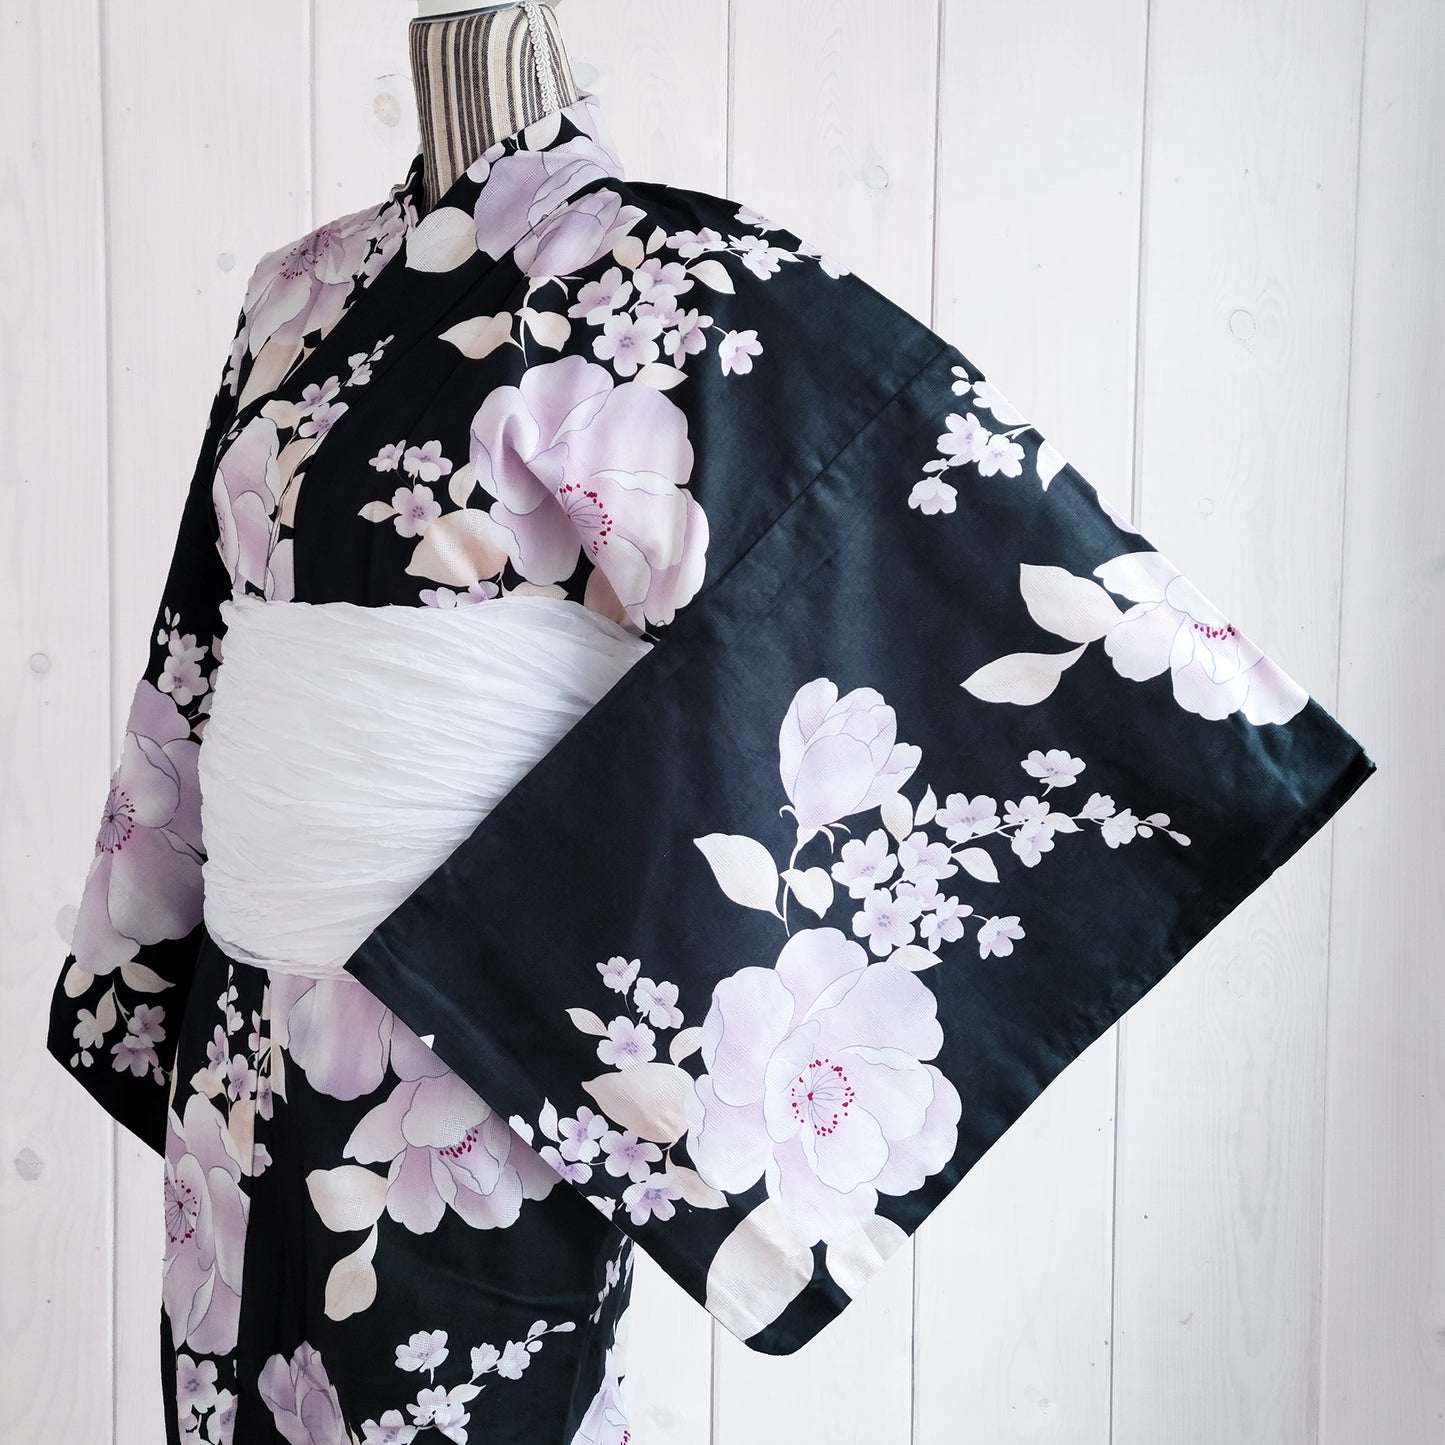 Women's Japanese Yukata Kimono - Pink Cherry Blossoms in Black